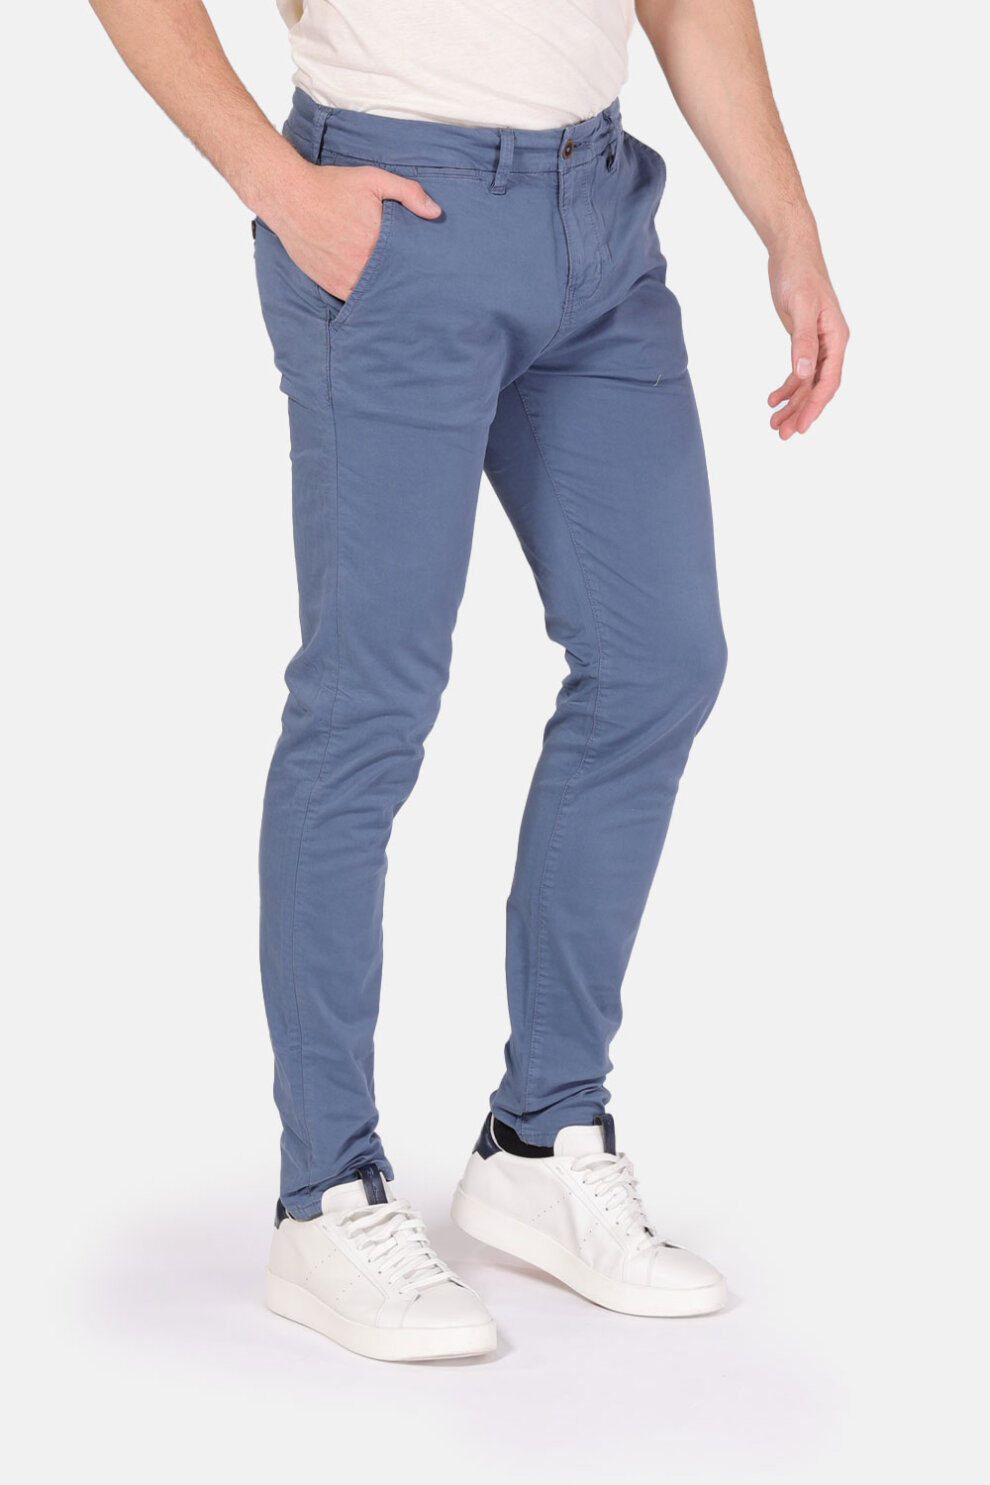 MUŠKARCI - Hlače - Mustang Chino Cigarette hlače - Duge hlače - Plava